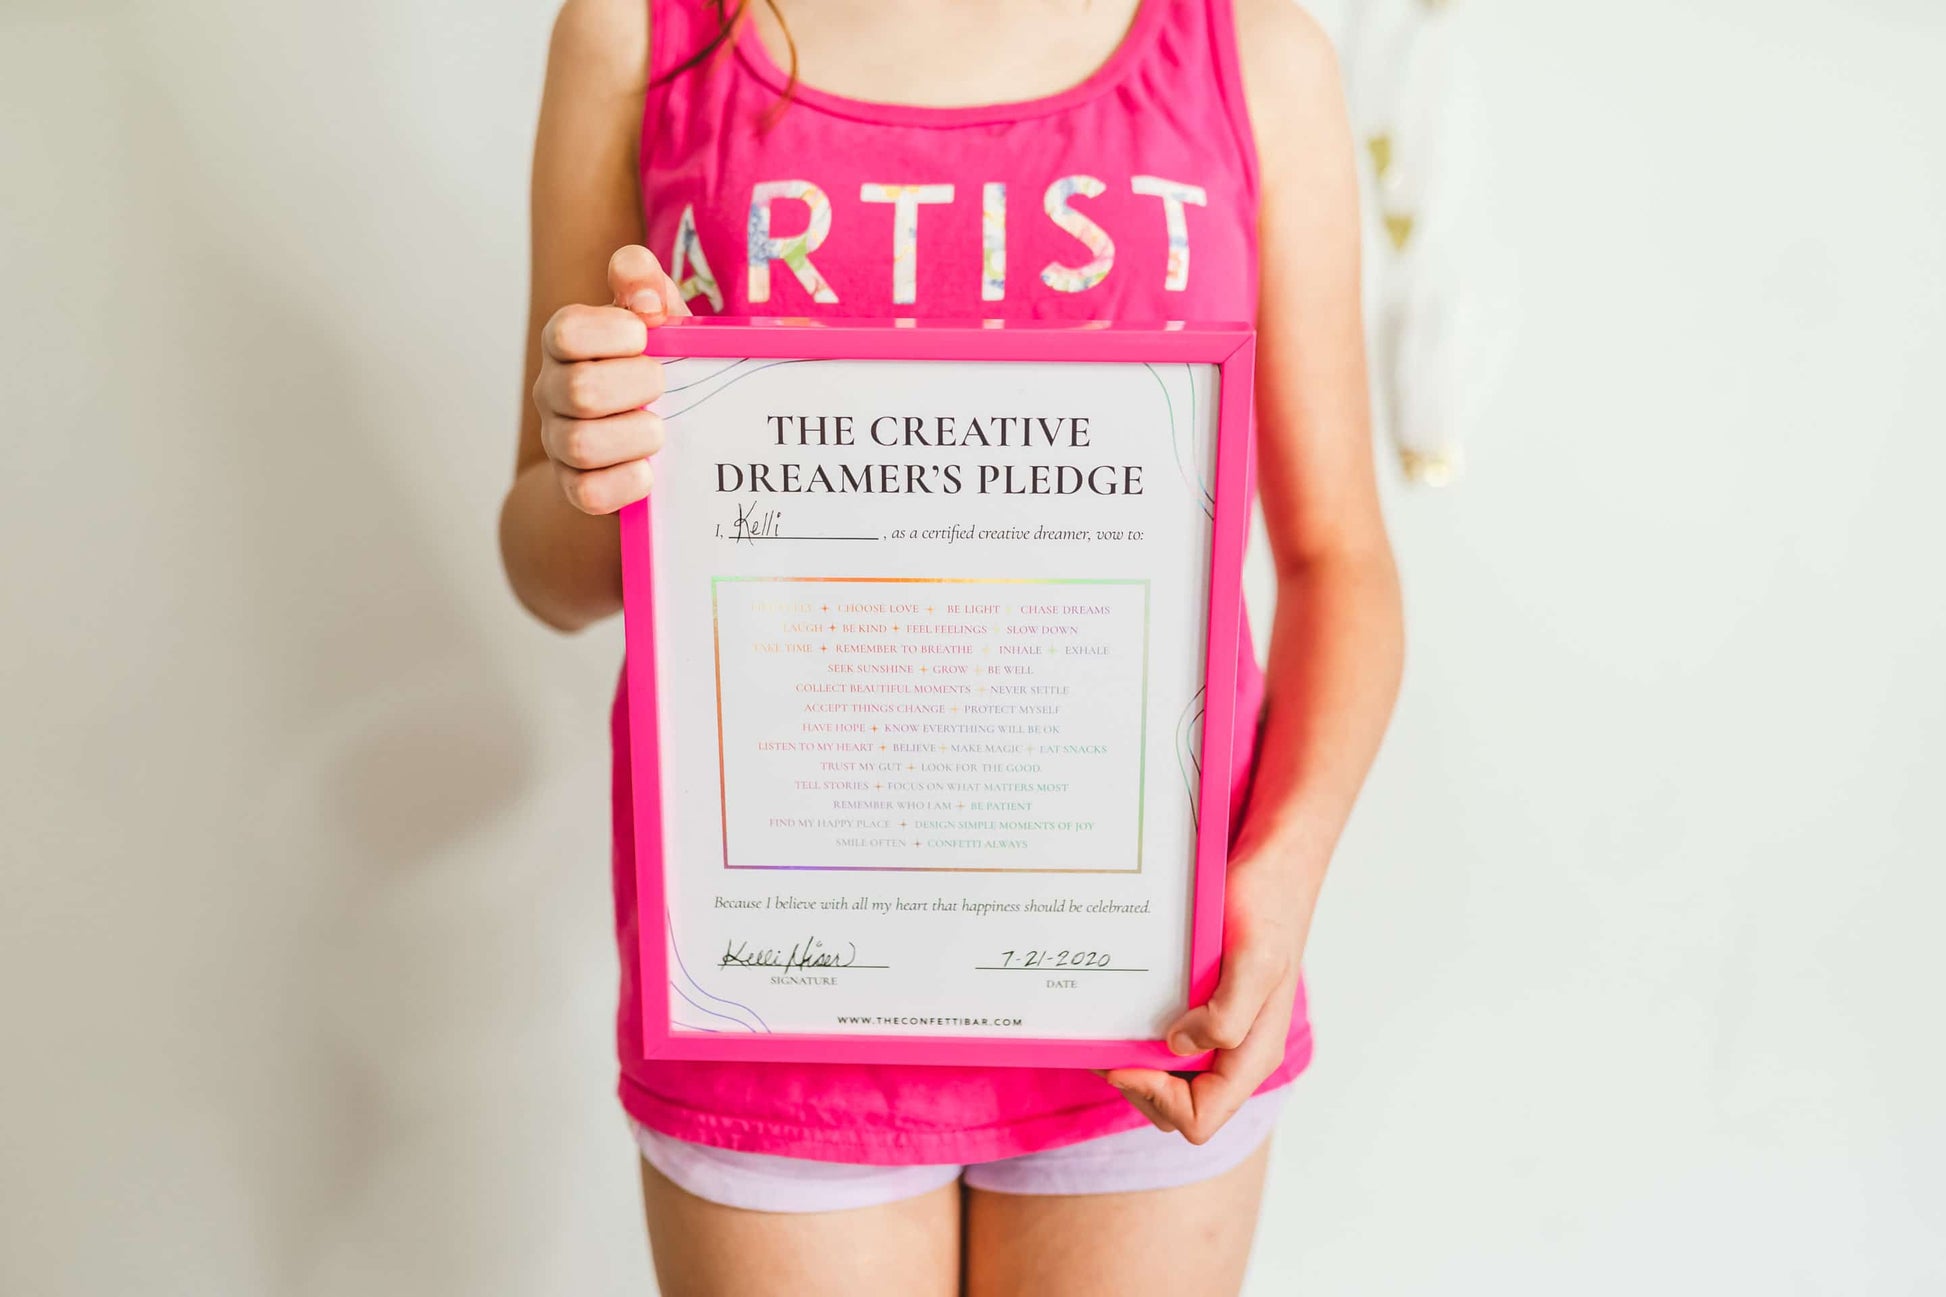 The Creative Dreamer's Pledge